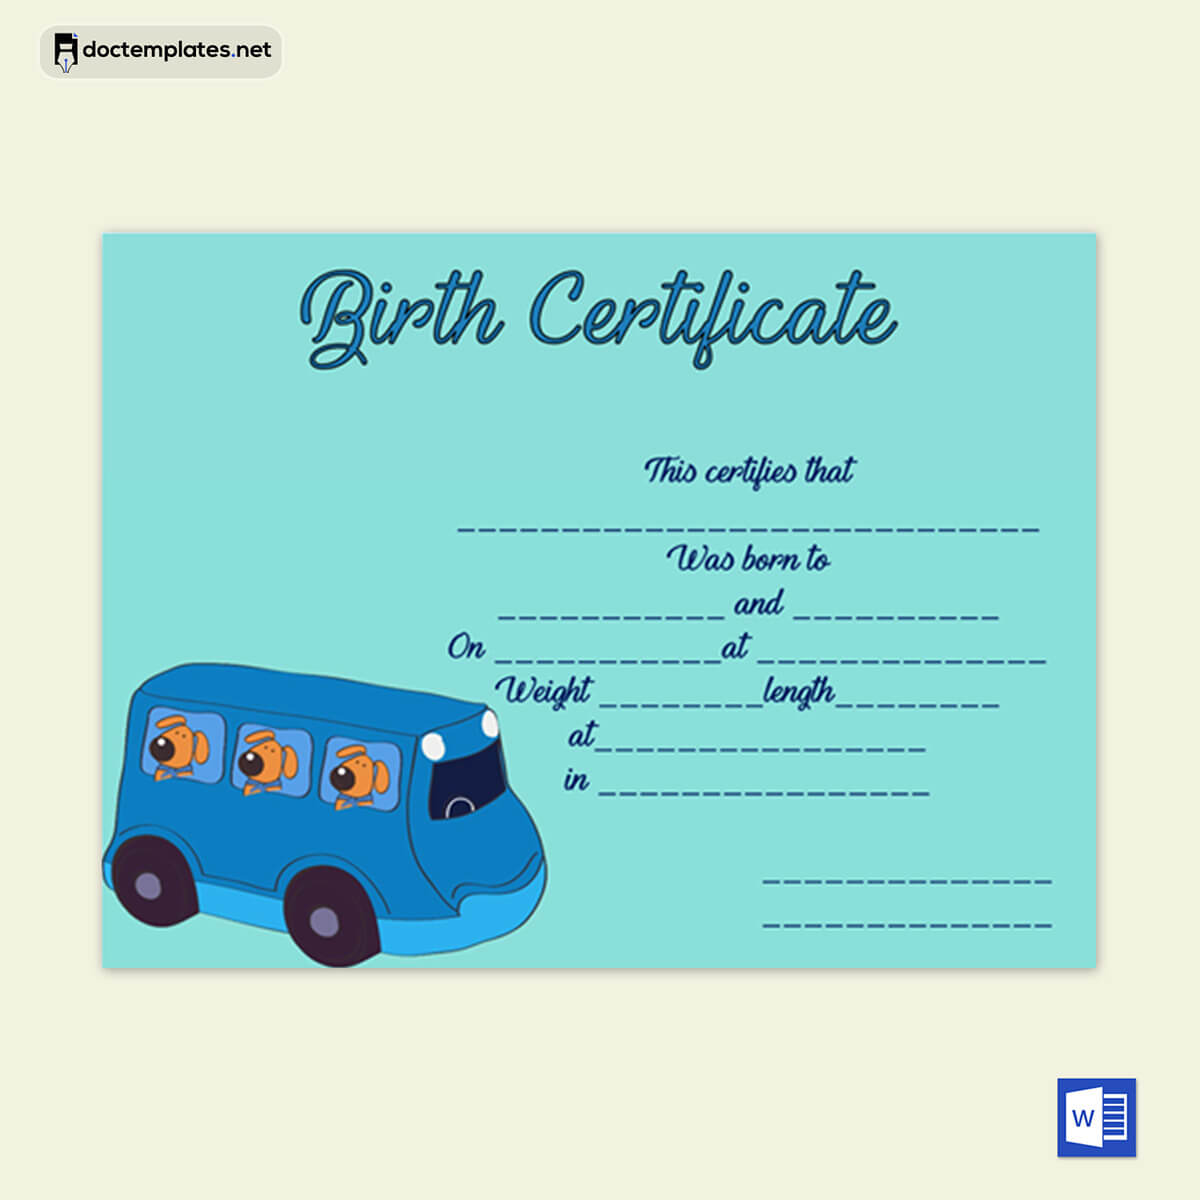 Image of Hospital birth certificate format PDF
Hospital birth certificate format PDF
02